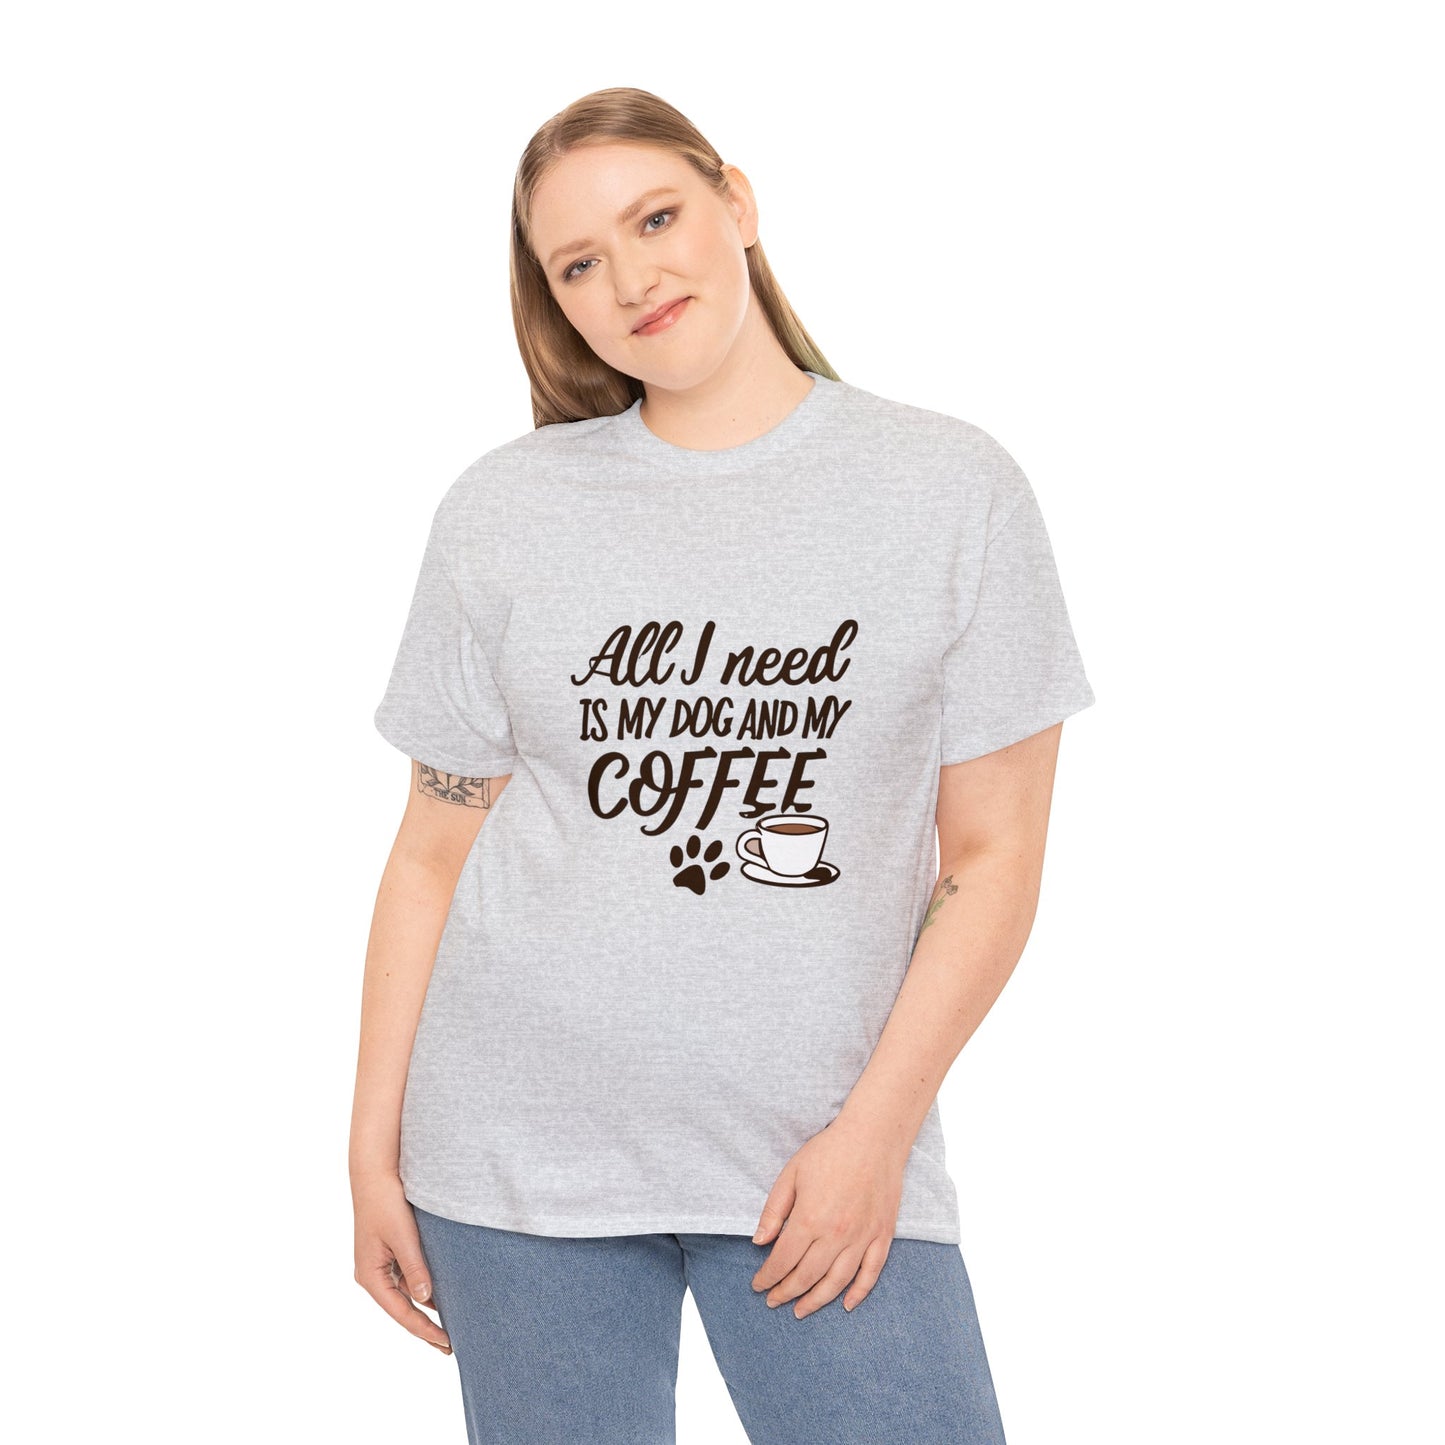 Coffee, Dog, My Dog, My Coffee, All I Need, Family Unisex Heavy Cotton Tee